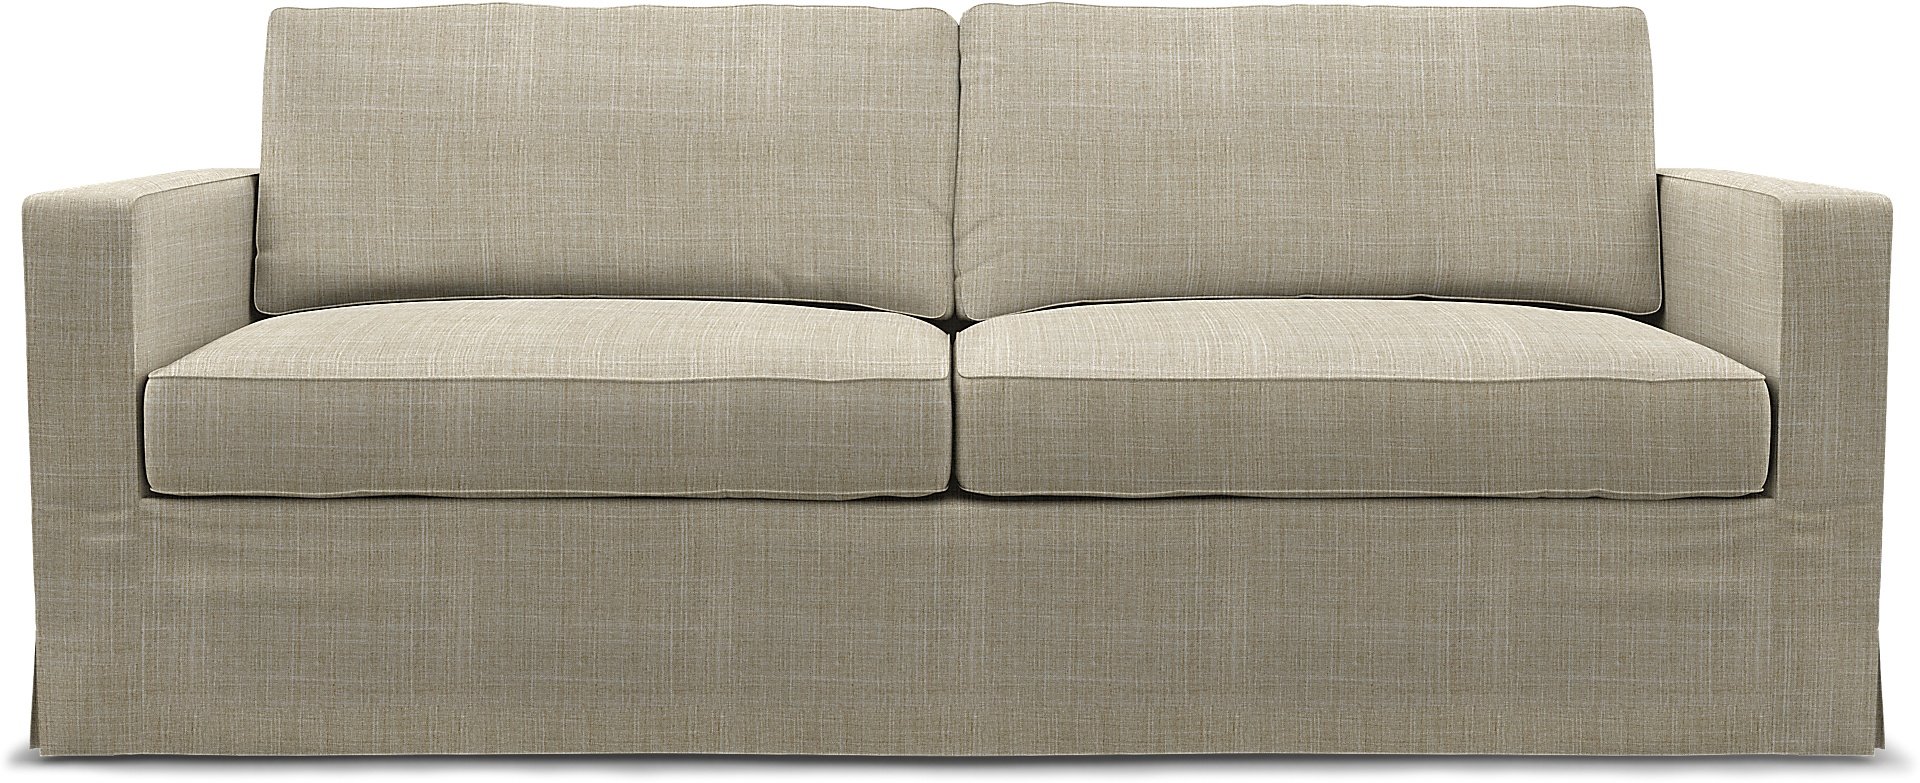 IKEA - Karlstad 3 Seater Sofa Cover, Sand Beige, Boucle & Texture - Bemz